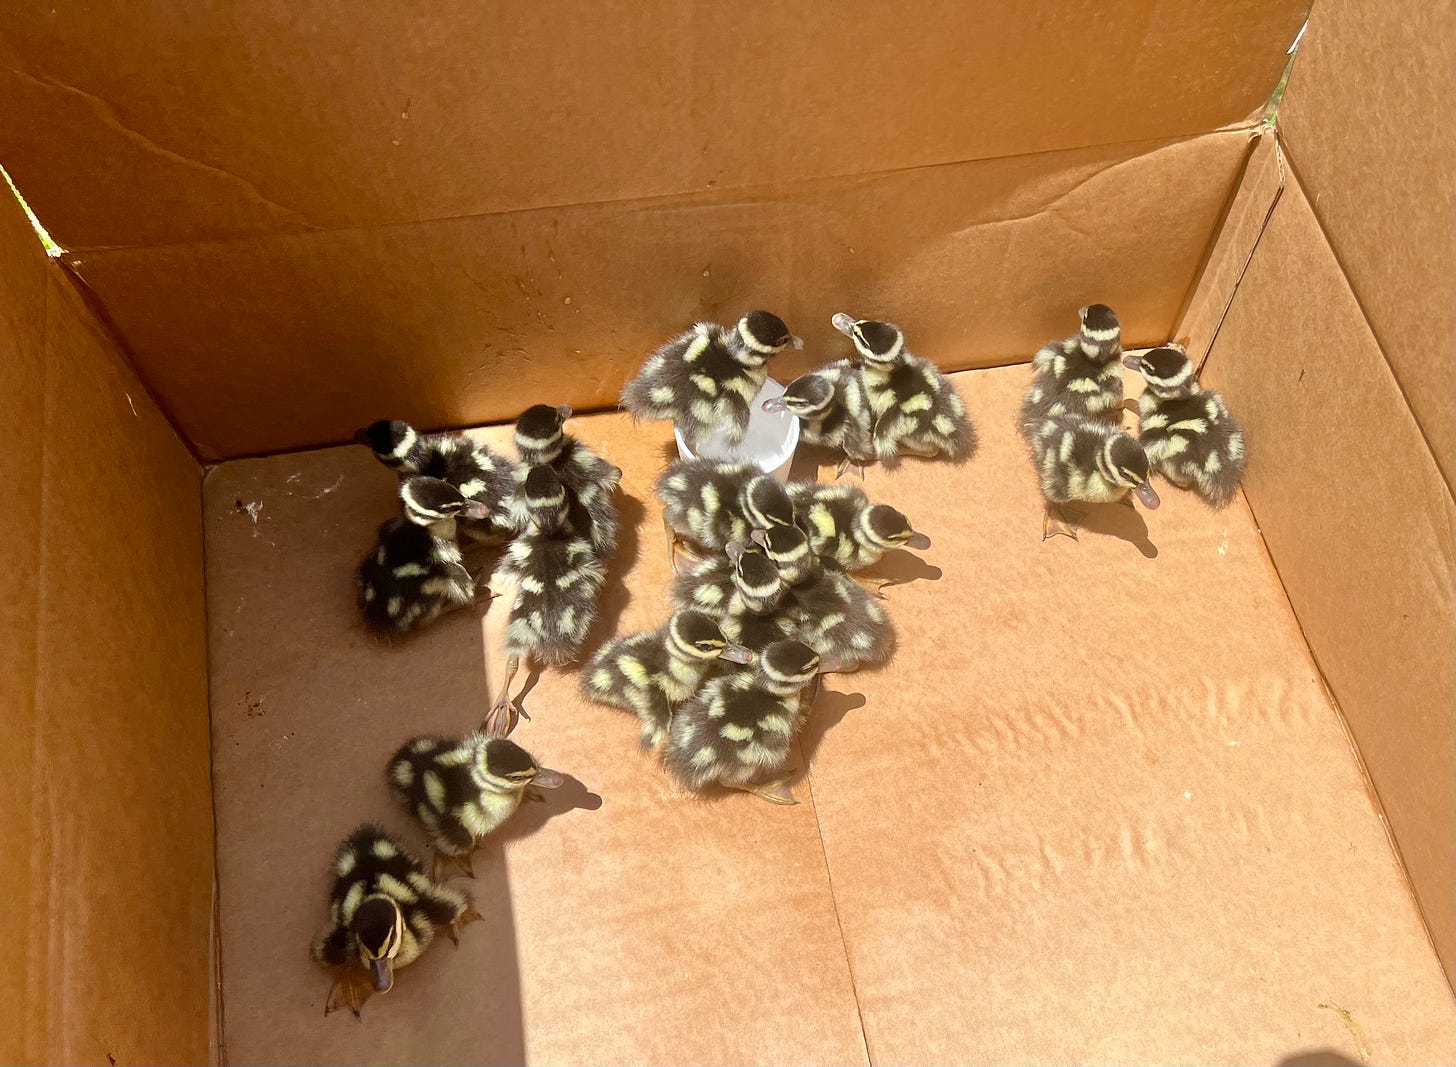 Black-bellied whistling duck ducklings in a cardboard box